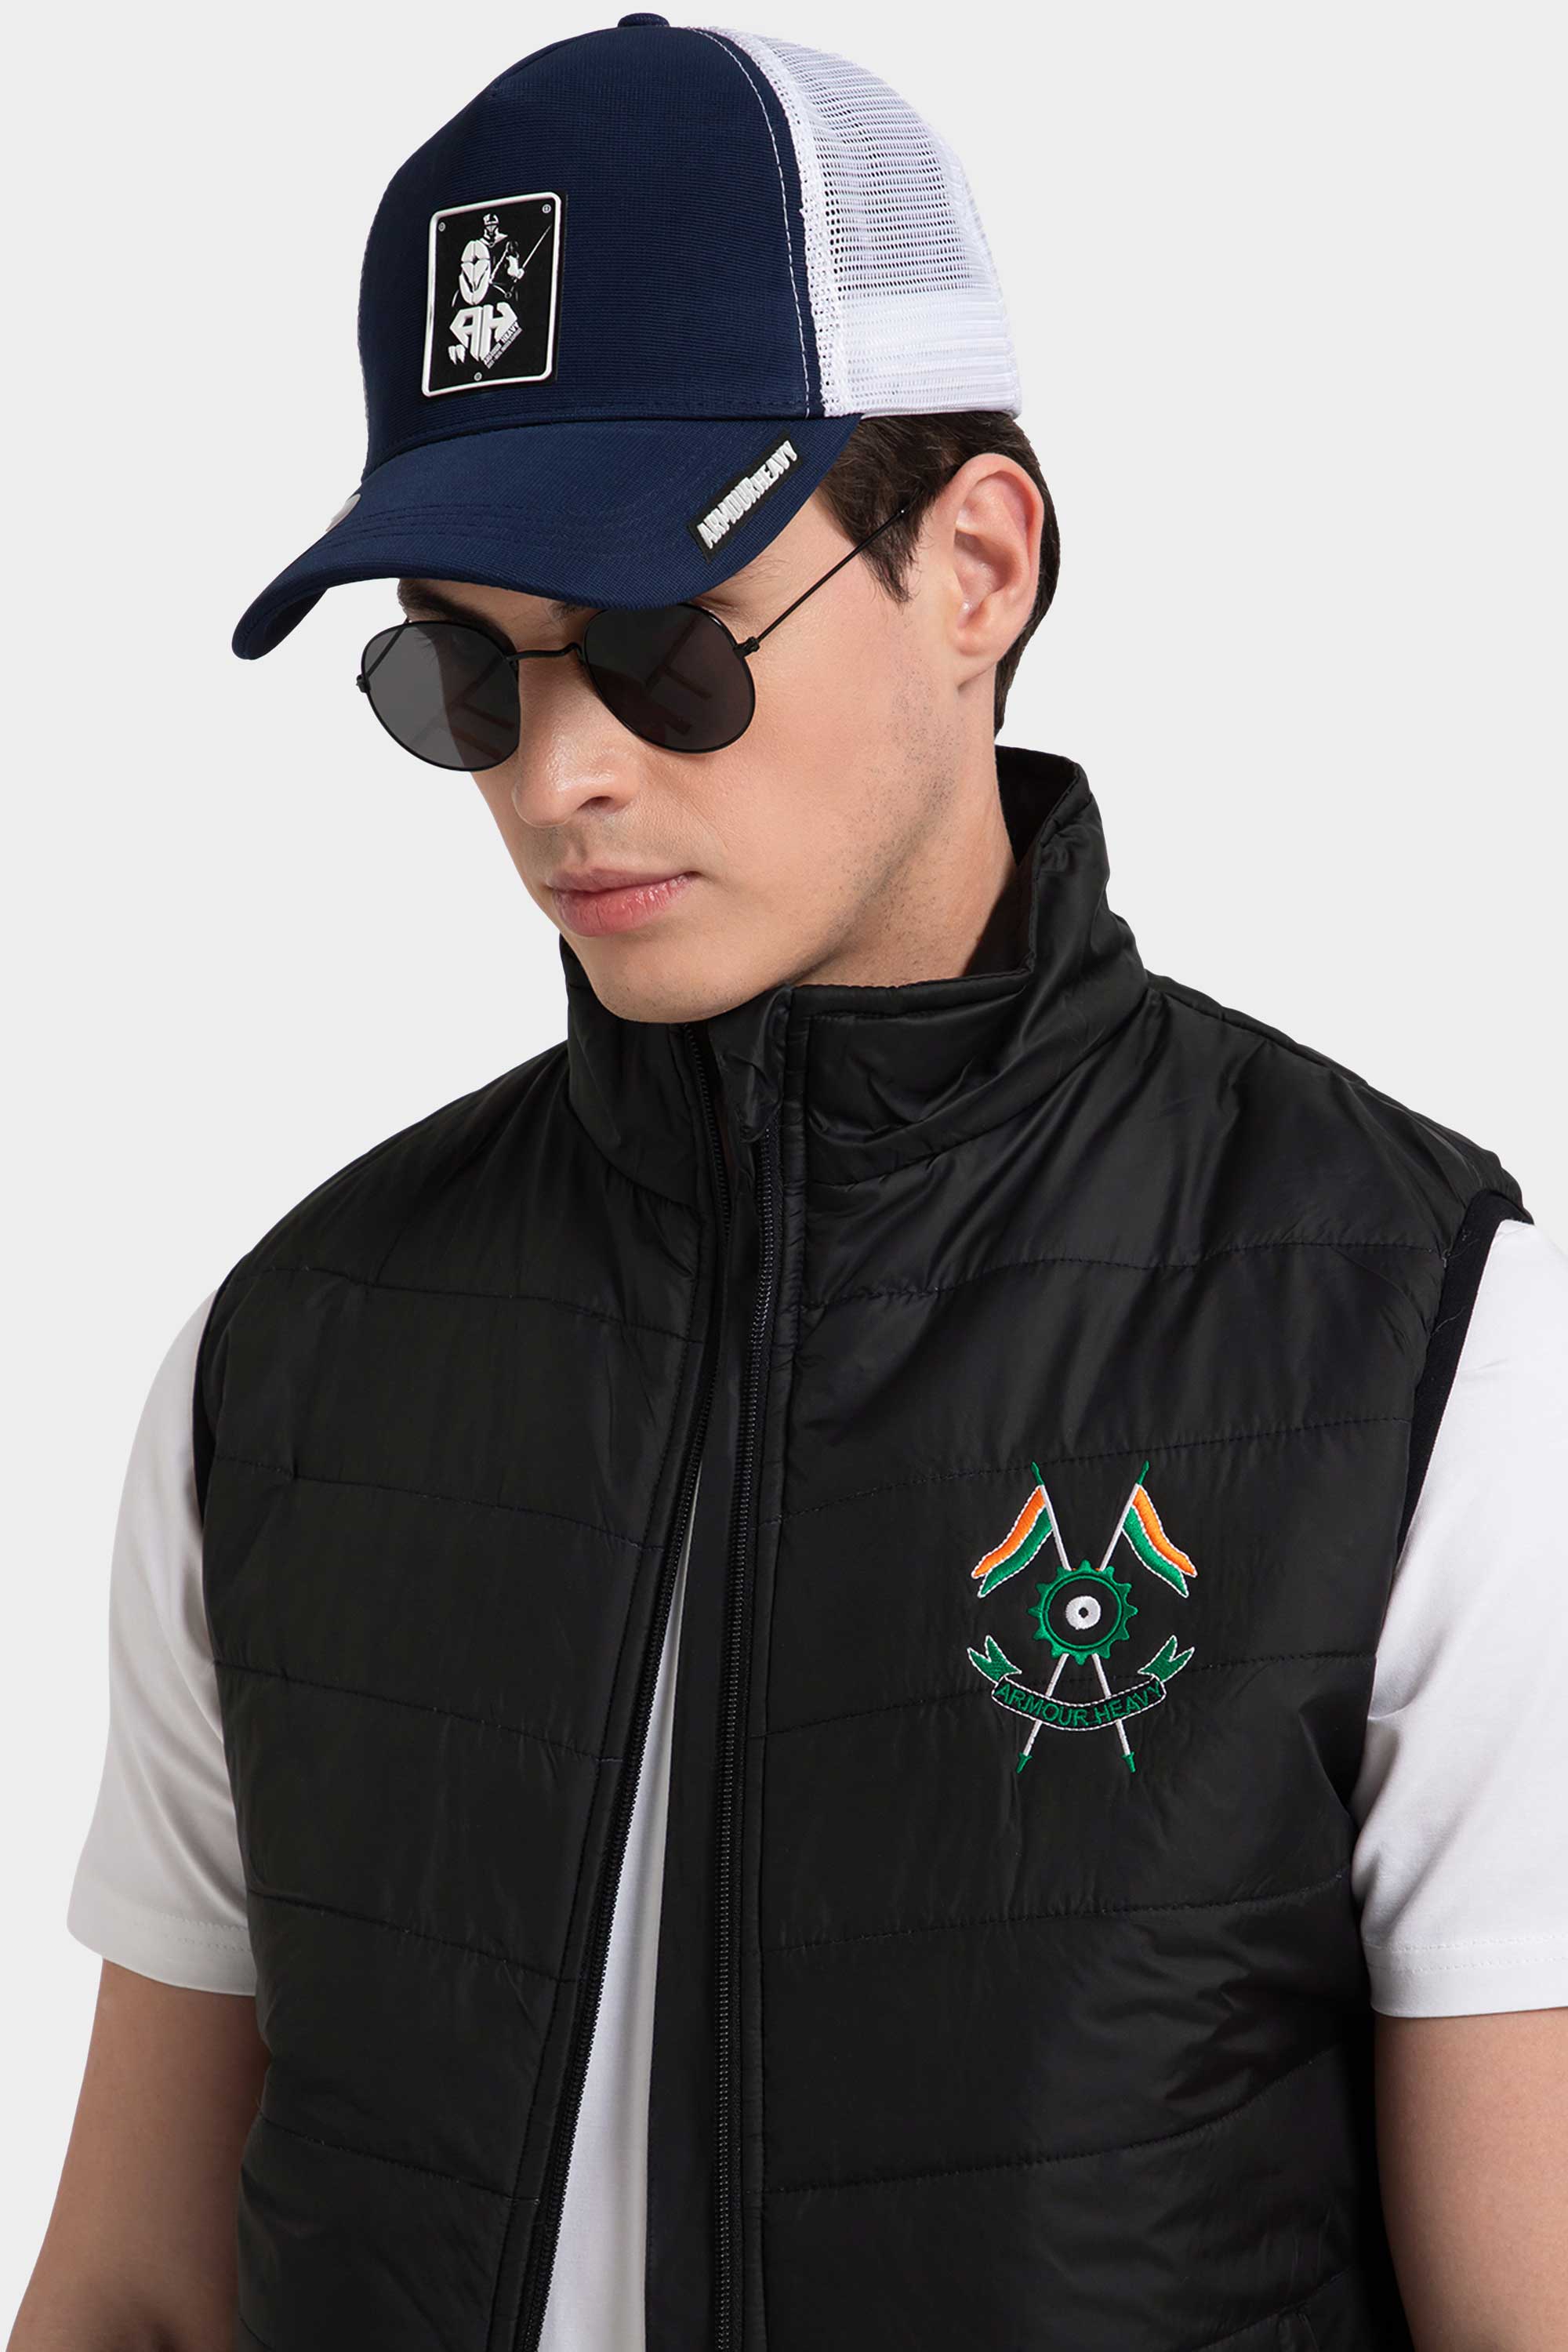 wholesale letters embroidered baseball jacket men's| Alibaba.com